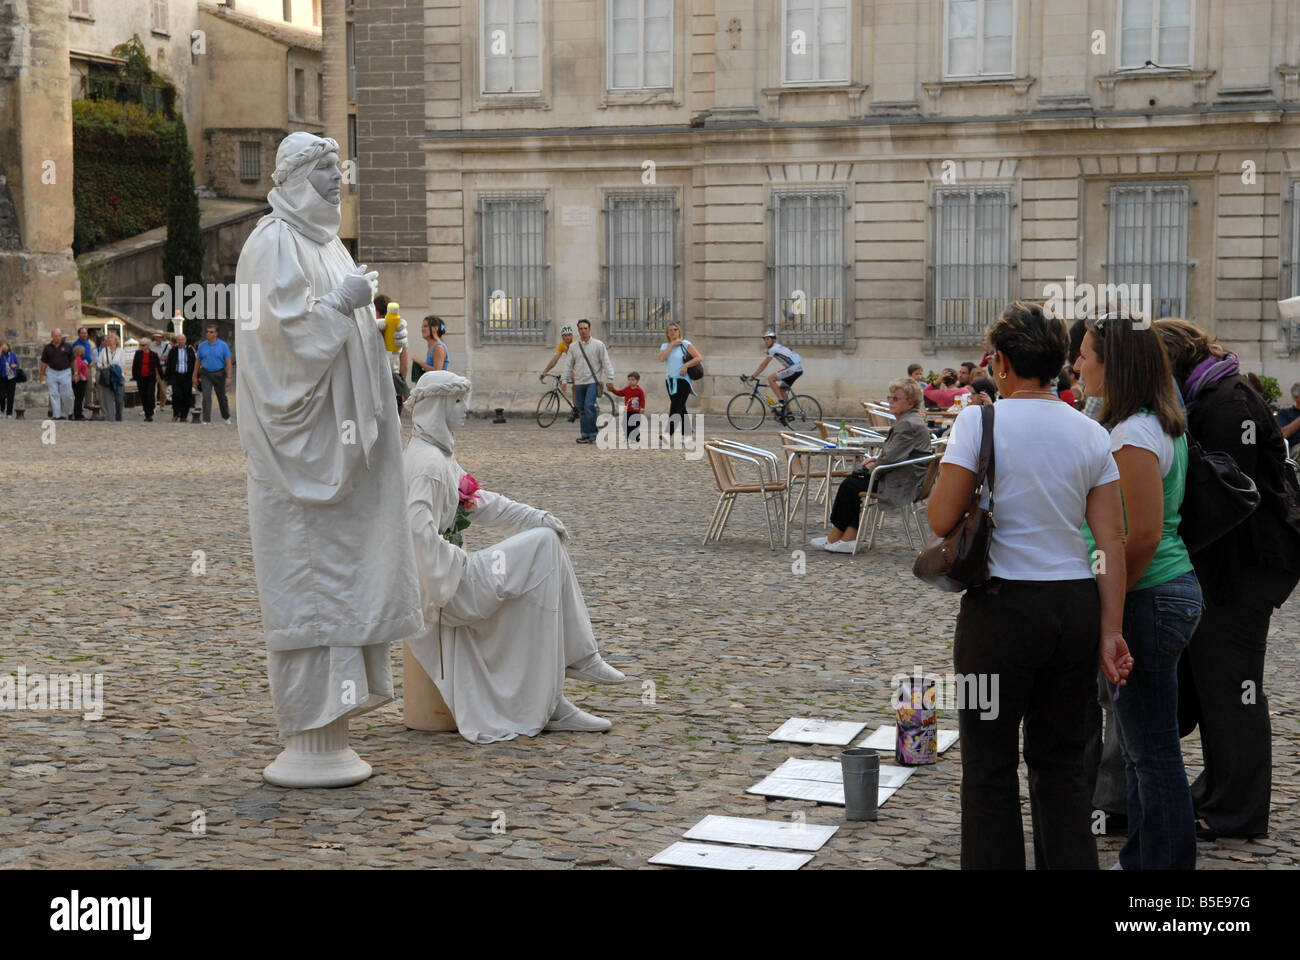 Mime artist entertaining tourists at The Palais de Papes in Avignon France Stock Photo